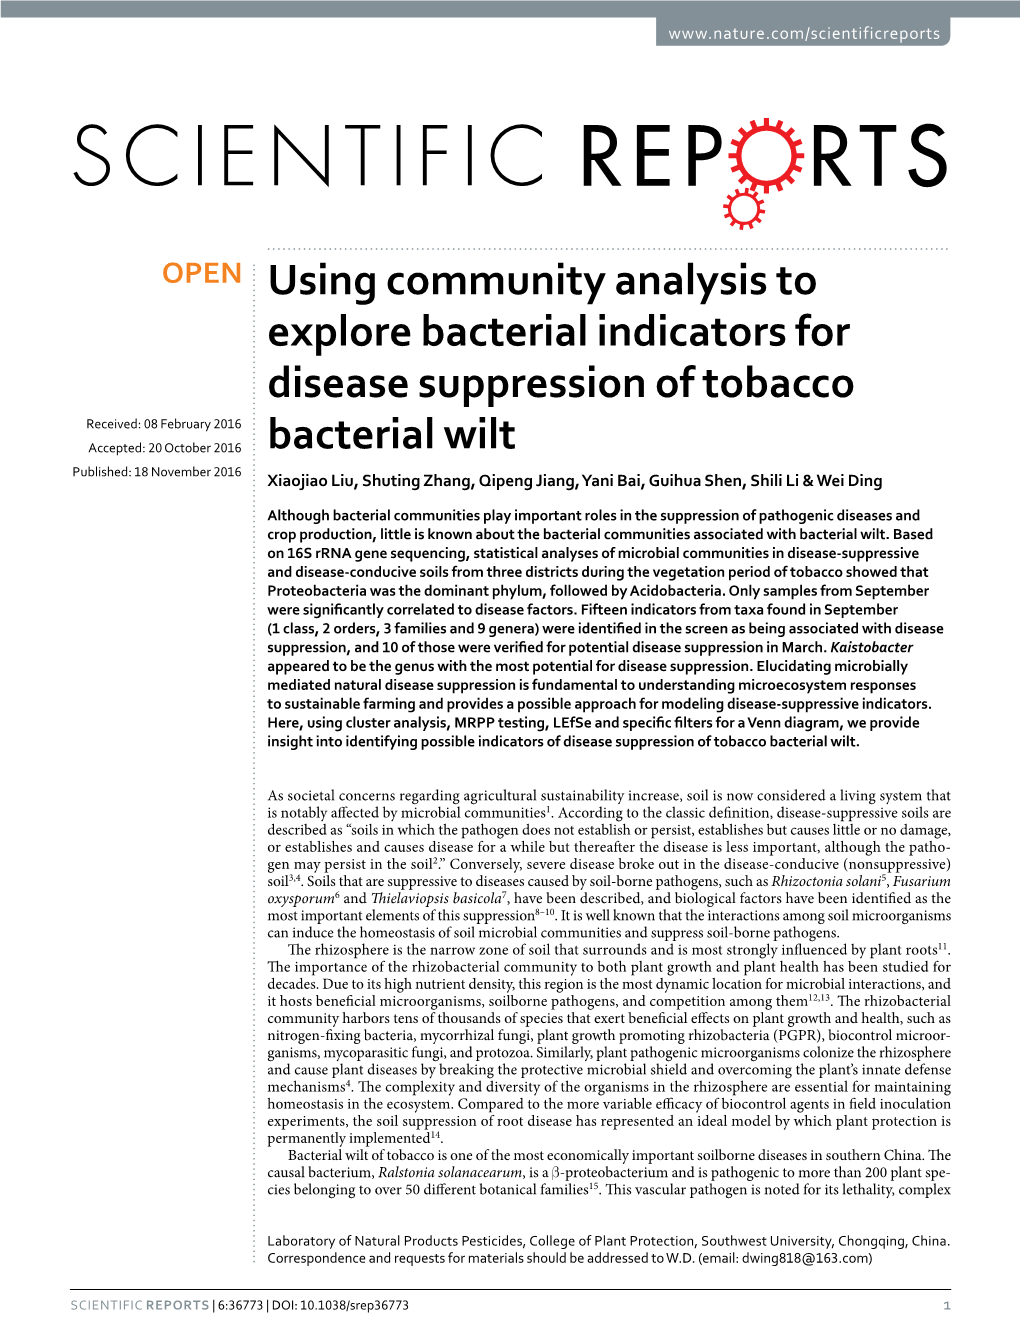 Using Community Analysis to Explore Bacterial Indicators for Disease